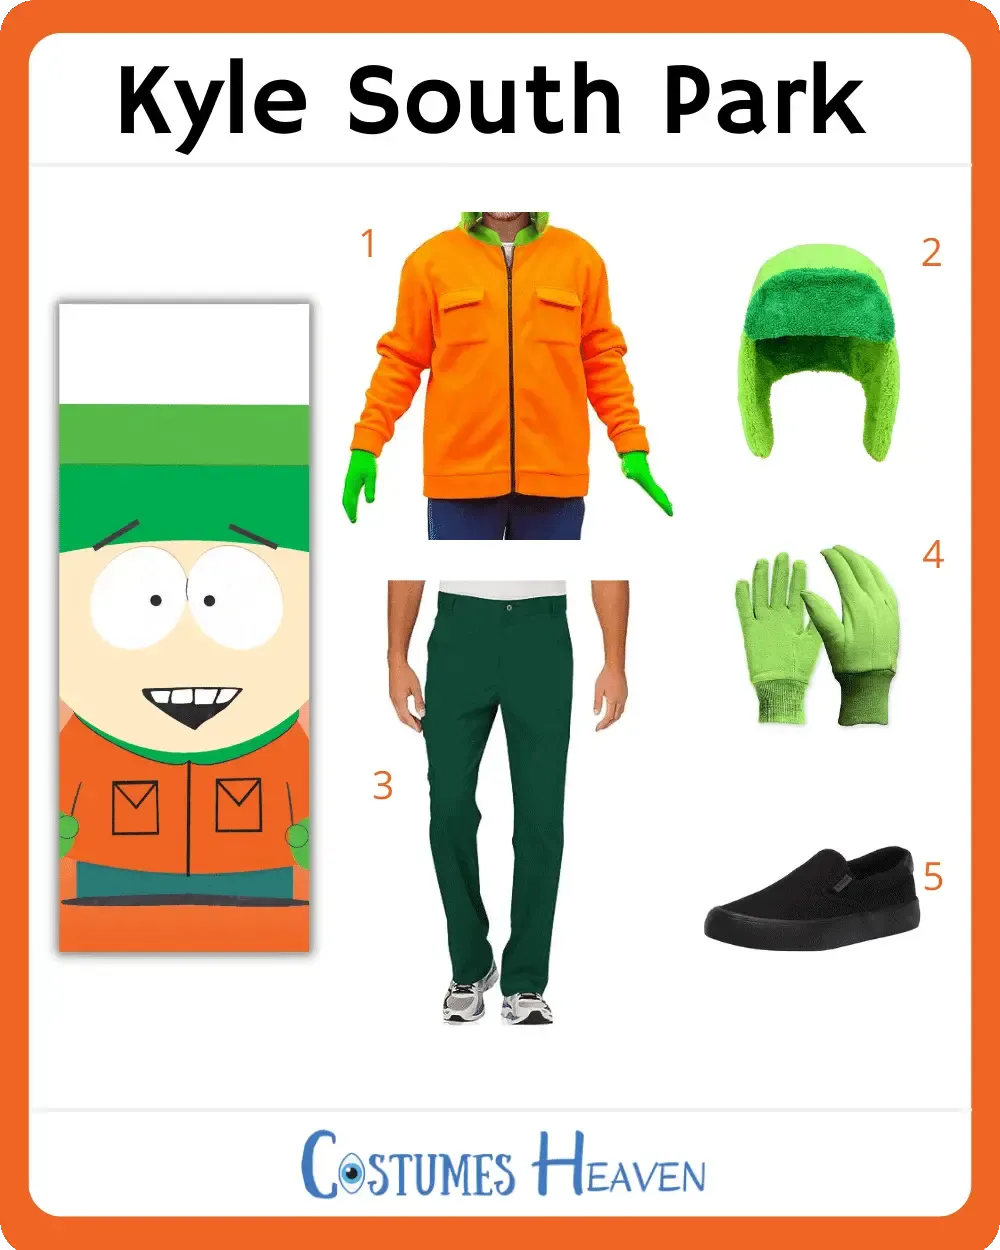 Kyle's South Park Costume